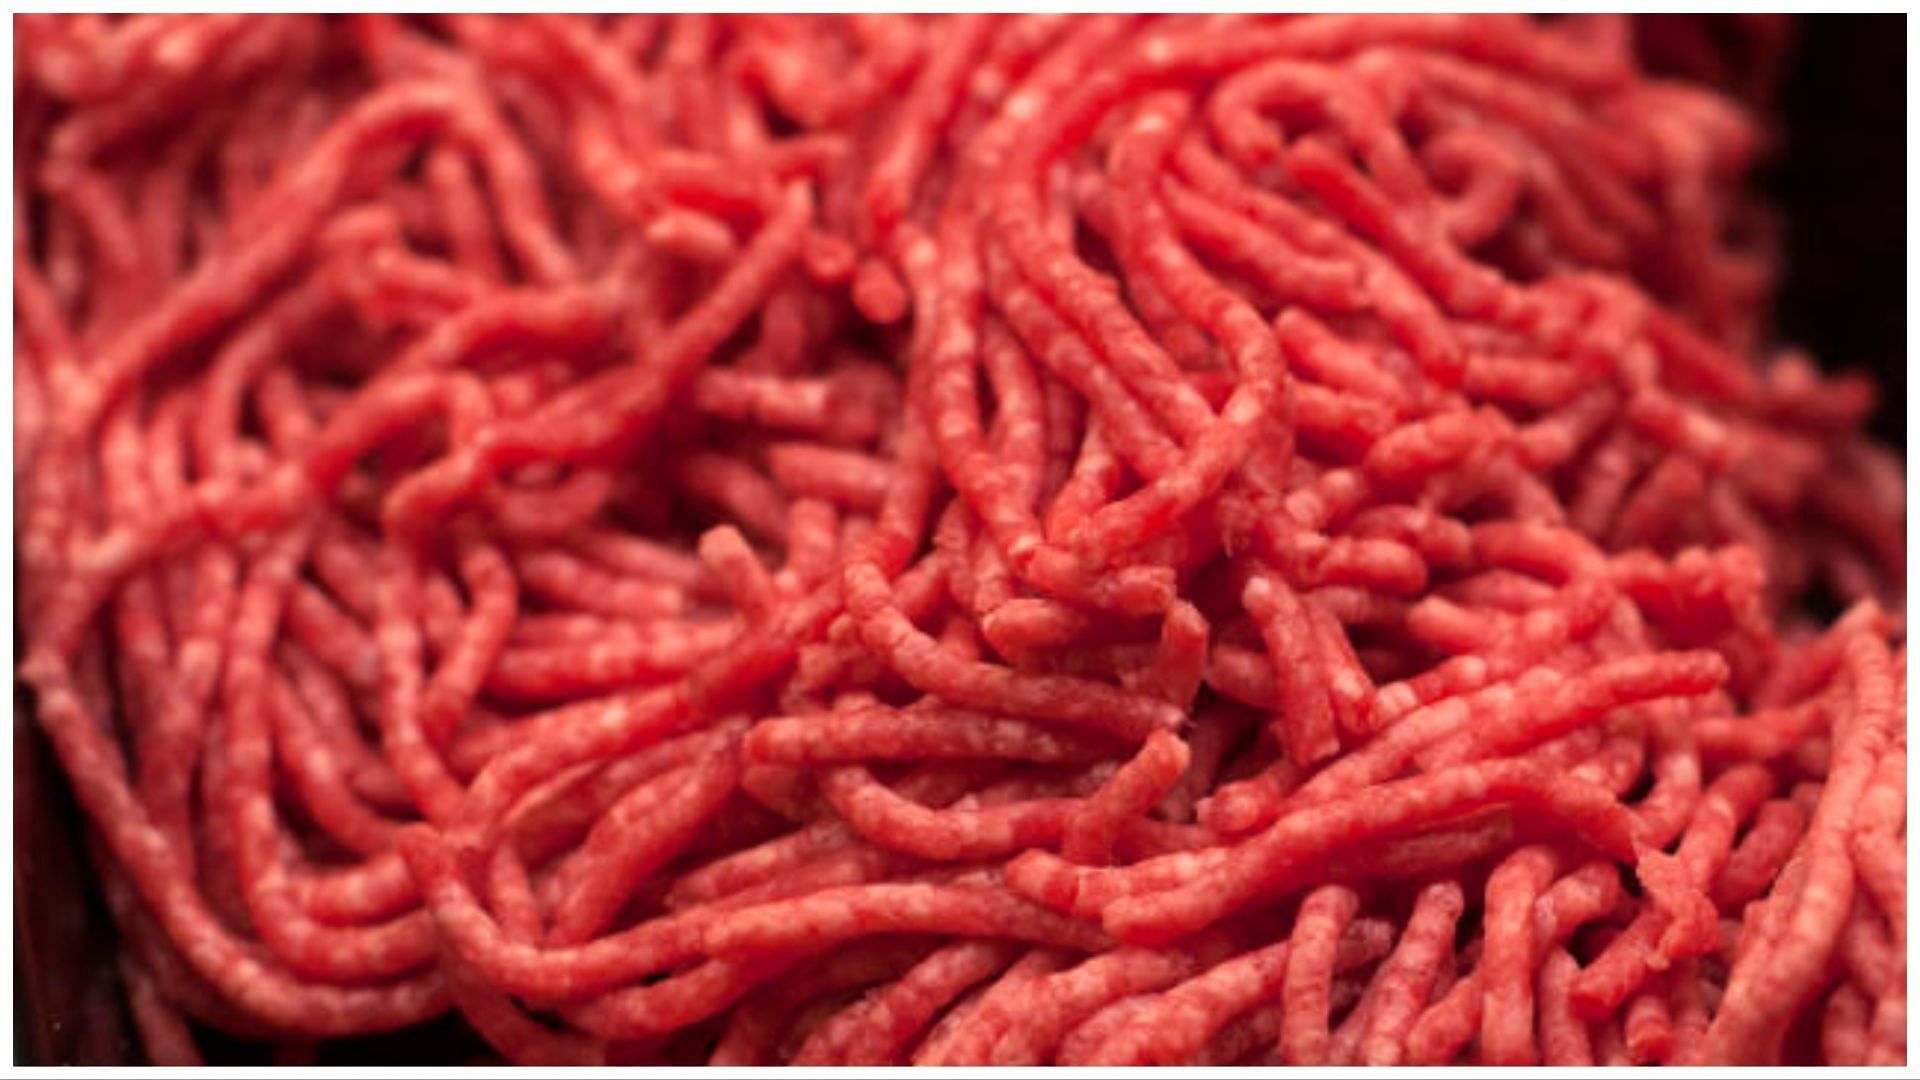 ShopRite ShopRite Ground beef recall fears emerge over salmonella concerns